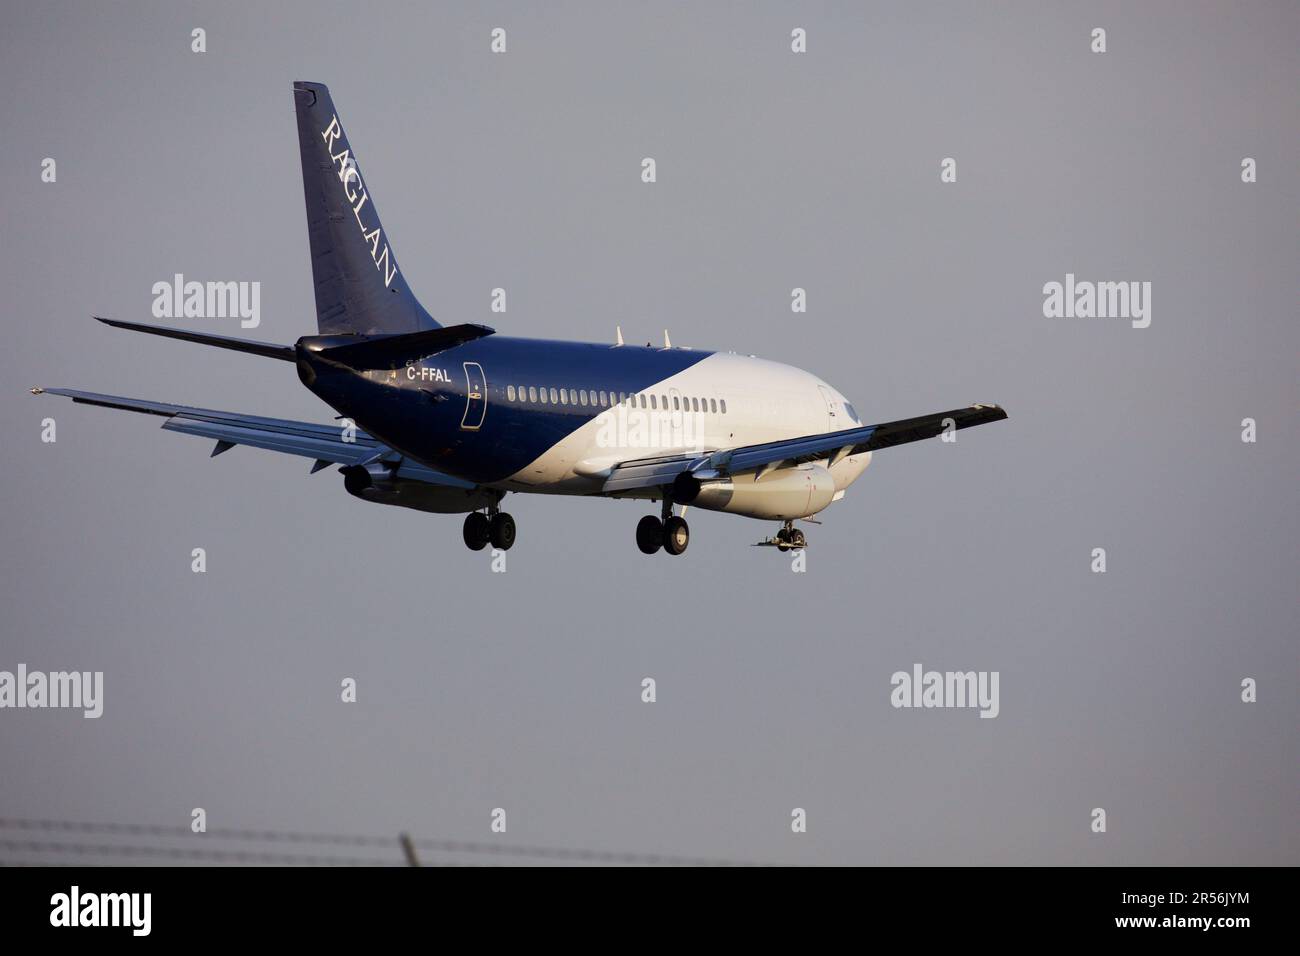 Raglan 737-200 Landing at Pearson Airport, Runway 23. Stock Photo